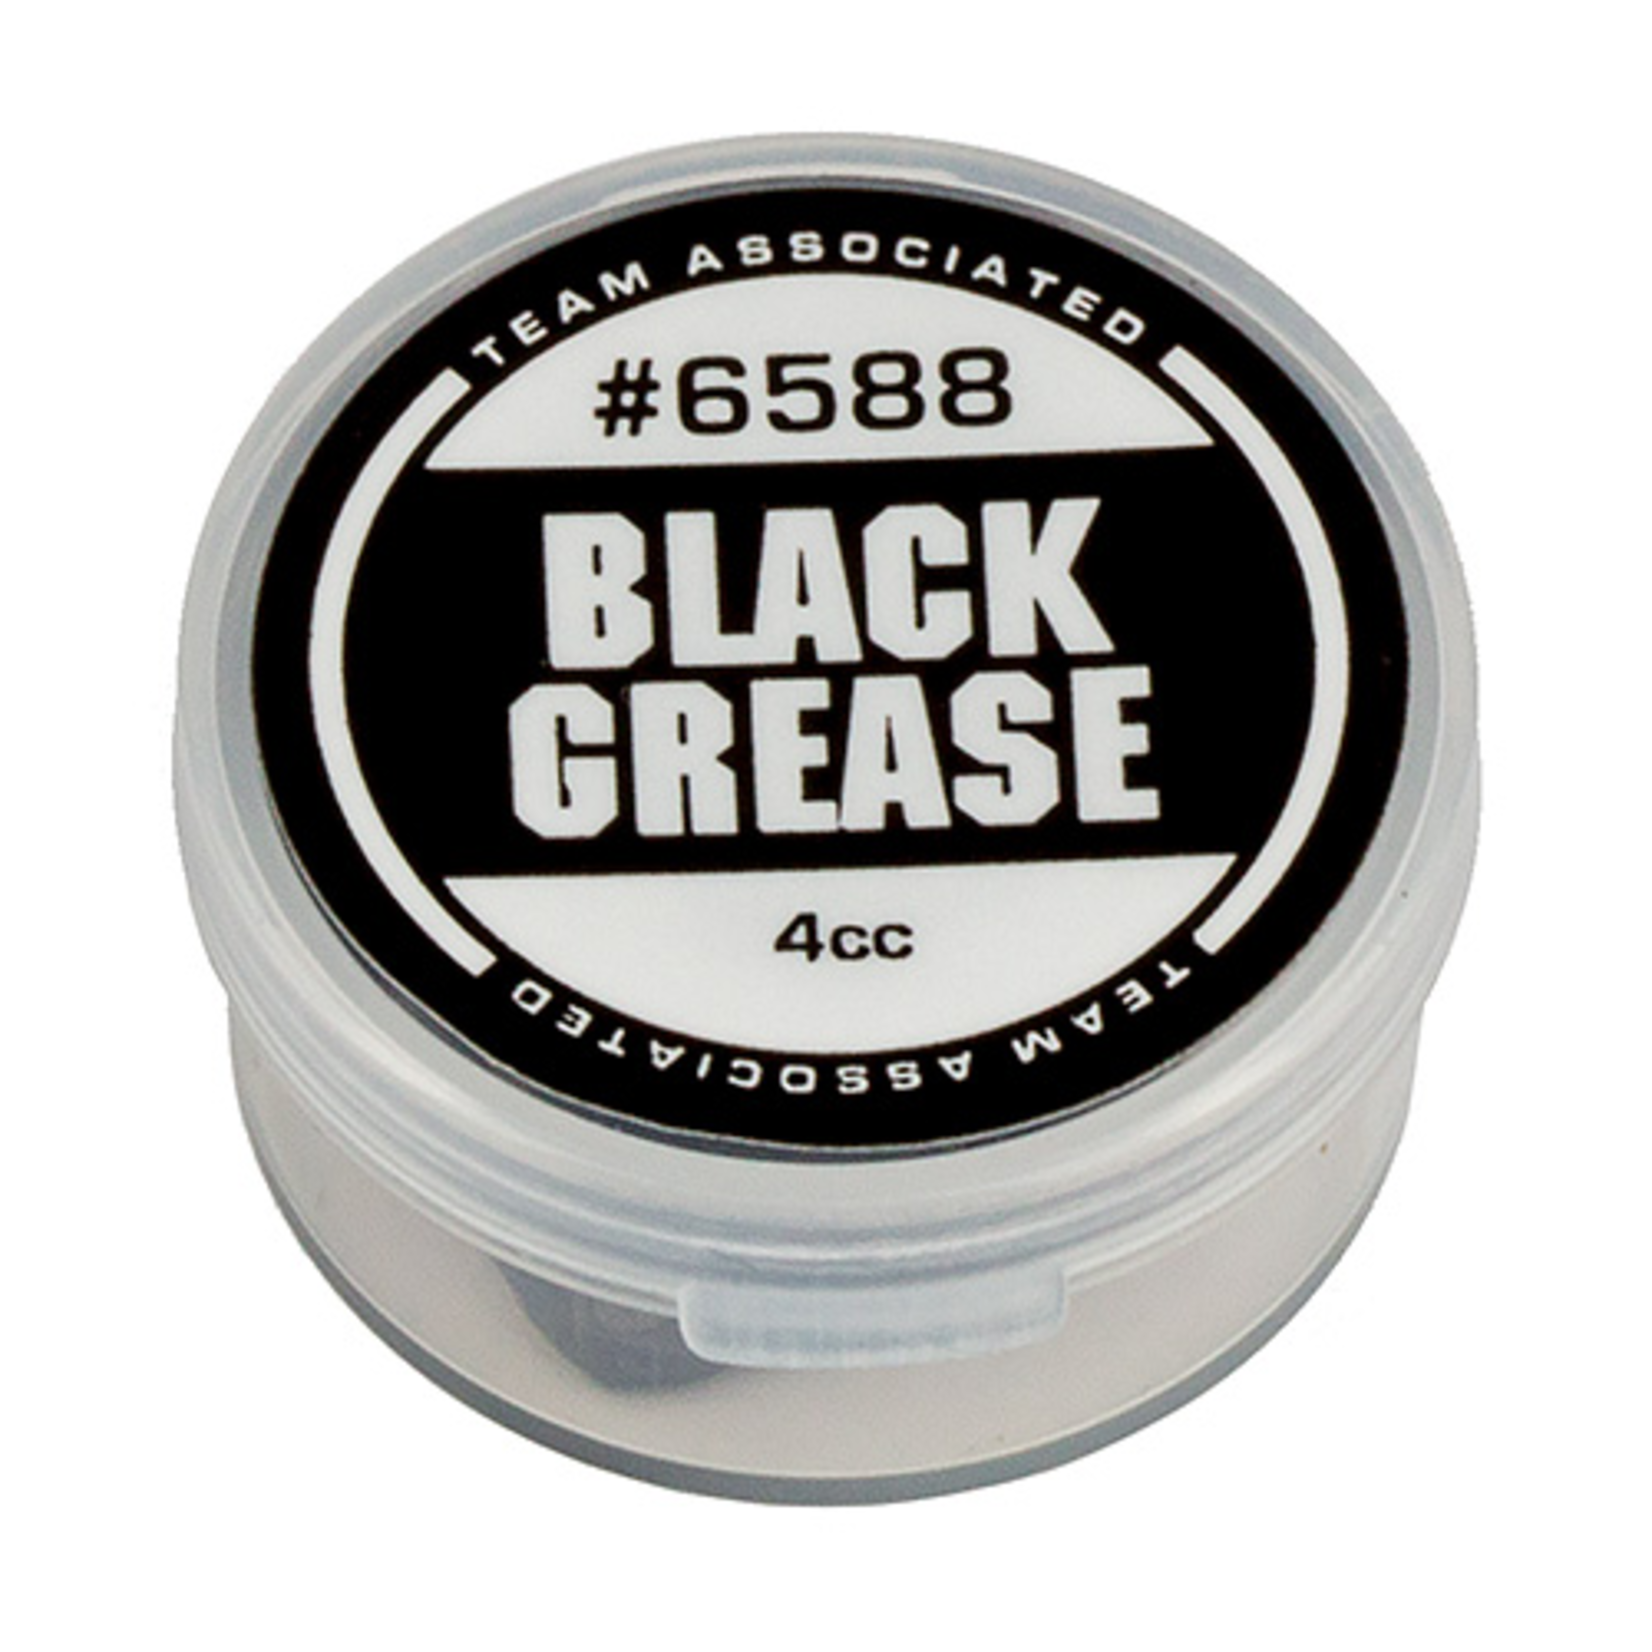 Team Associated Team Associated Black Grease (4cc) #6588